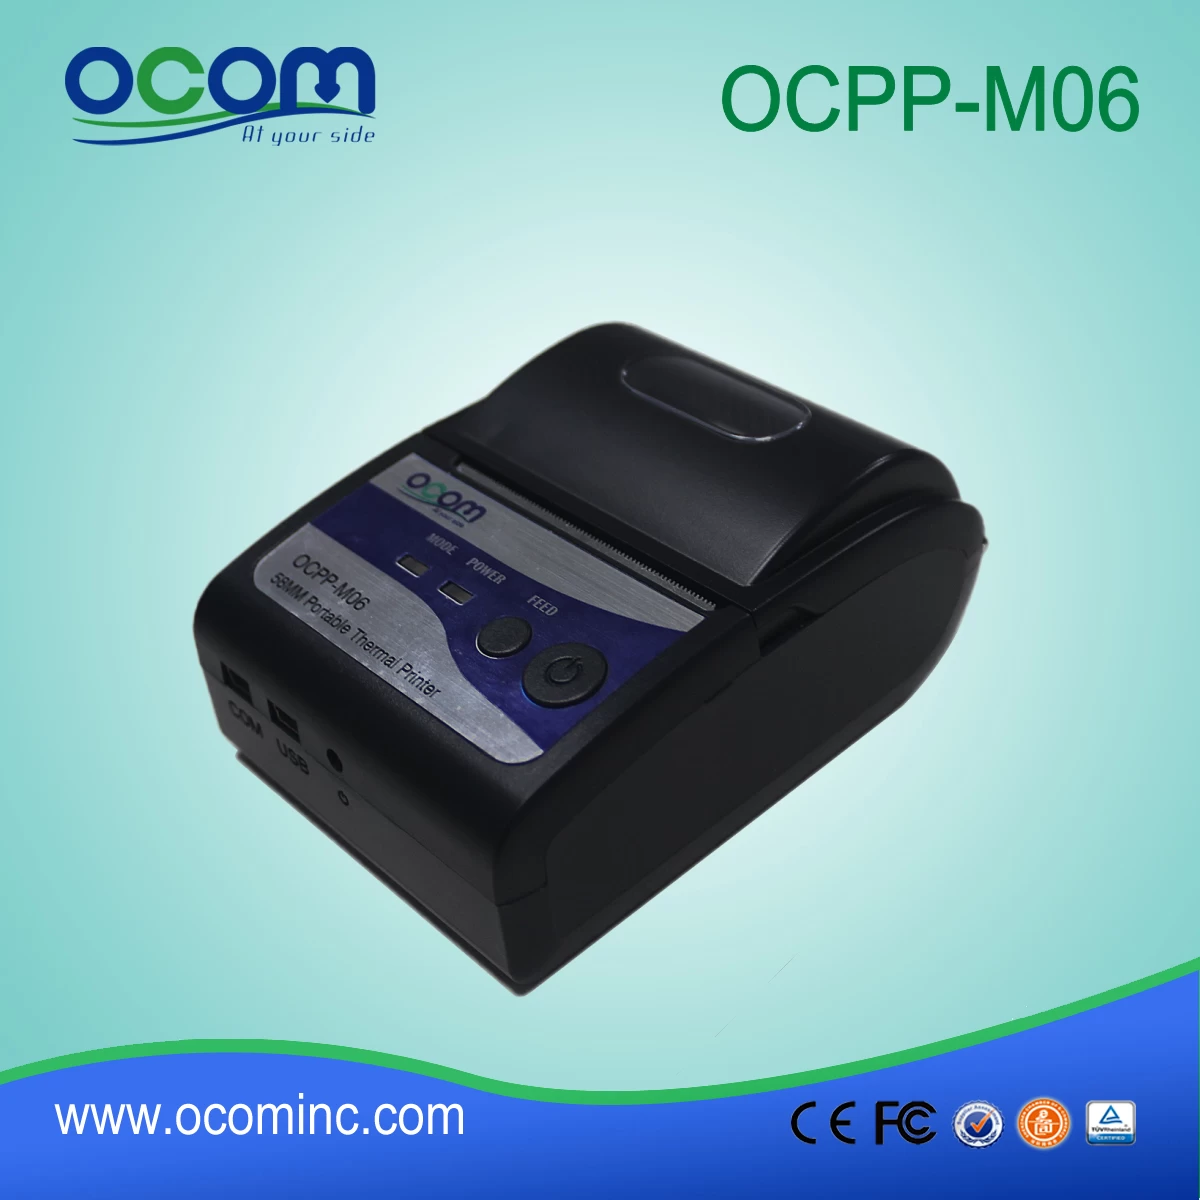 (OCPP-M06) OCOM 2015 Hot selling android portable bluetooth printer